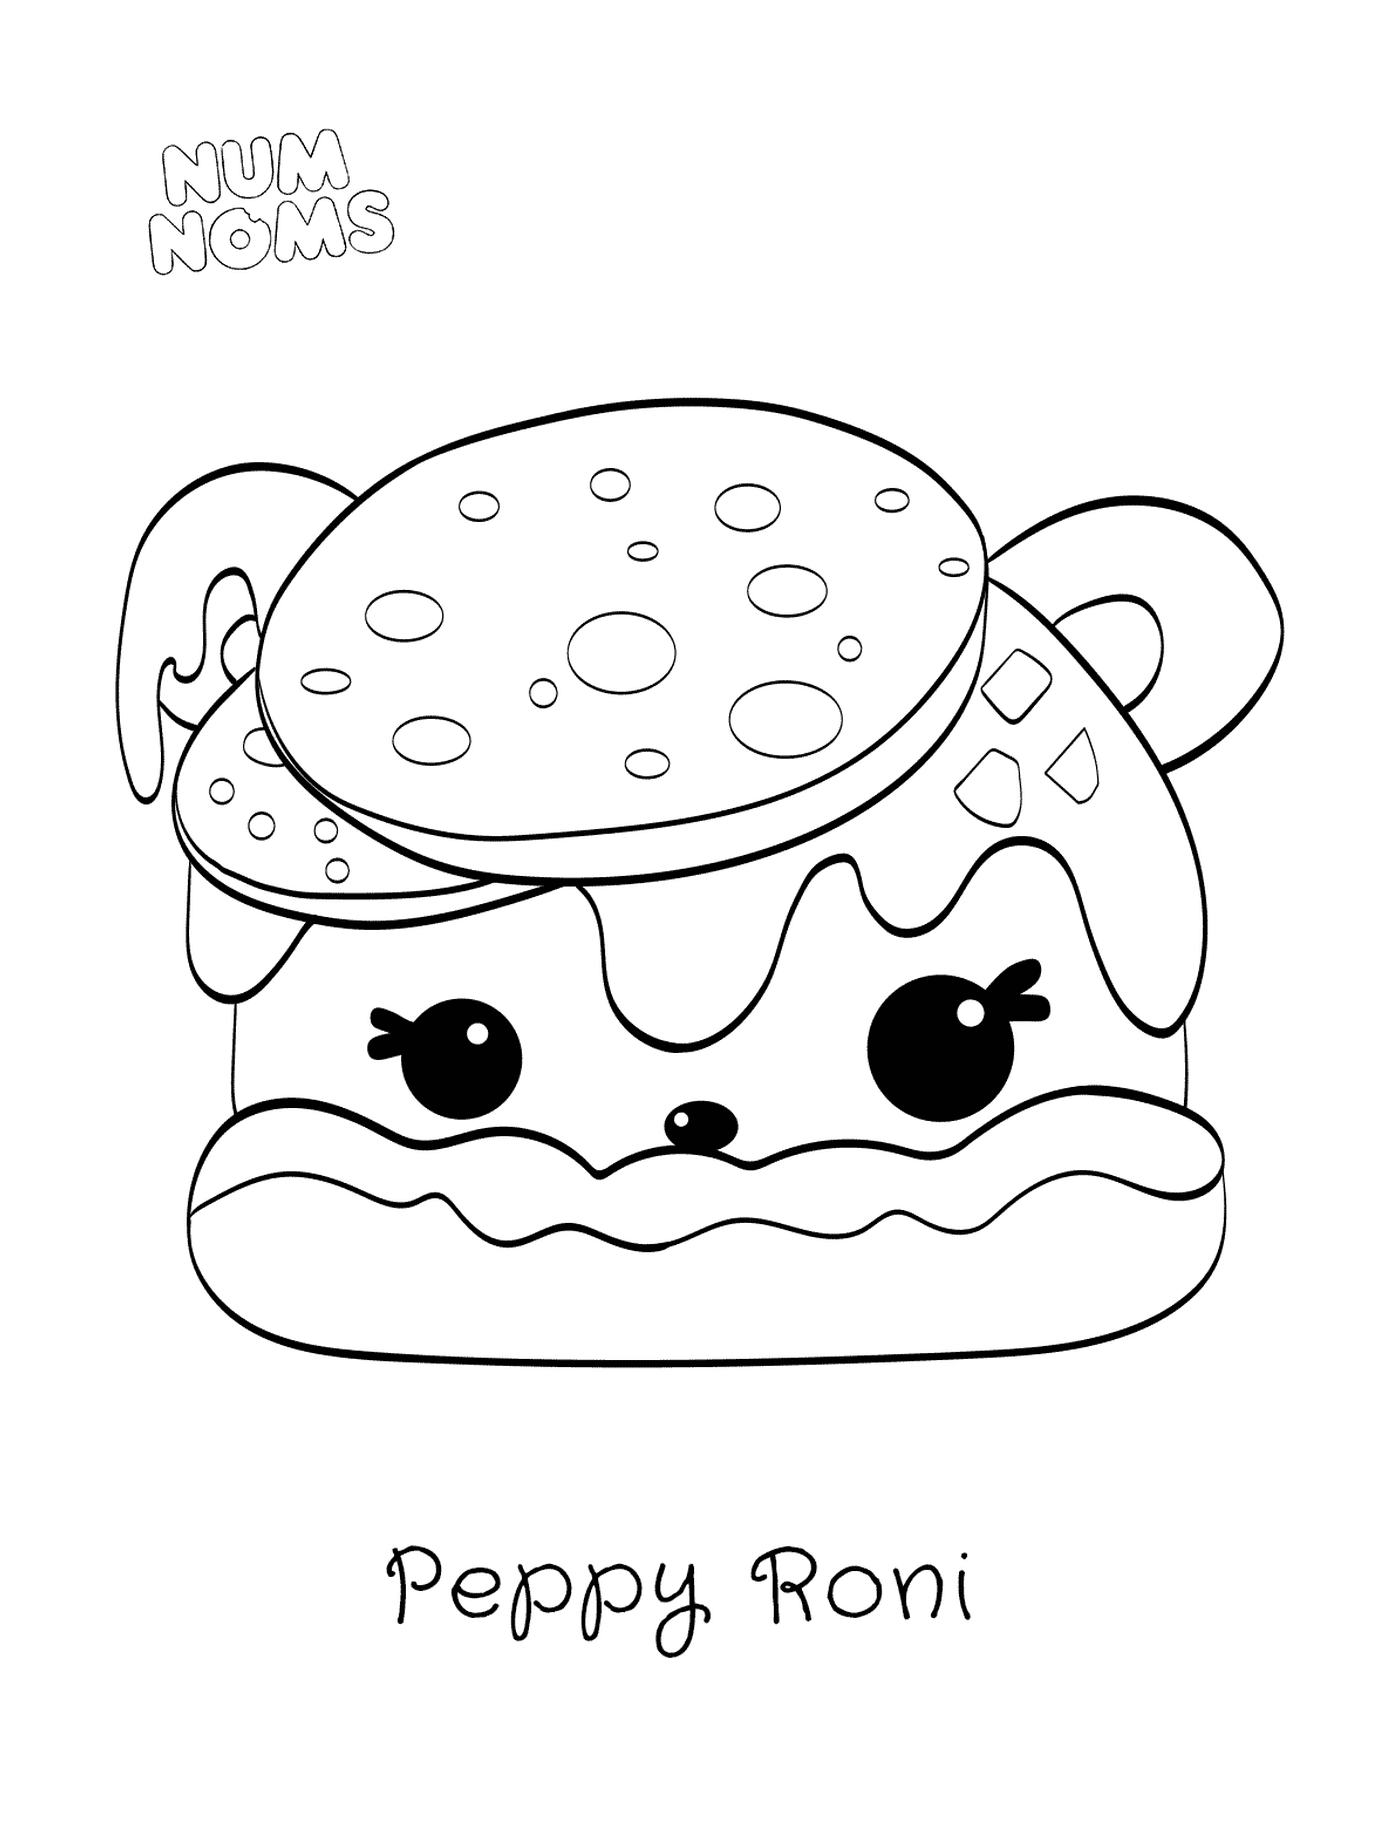  Pizza Peppy Roni por Num Nomes 